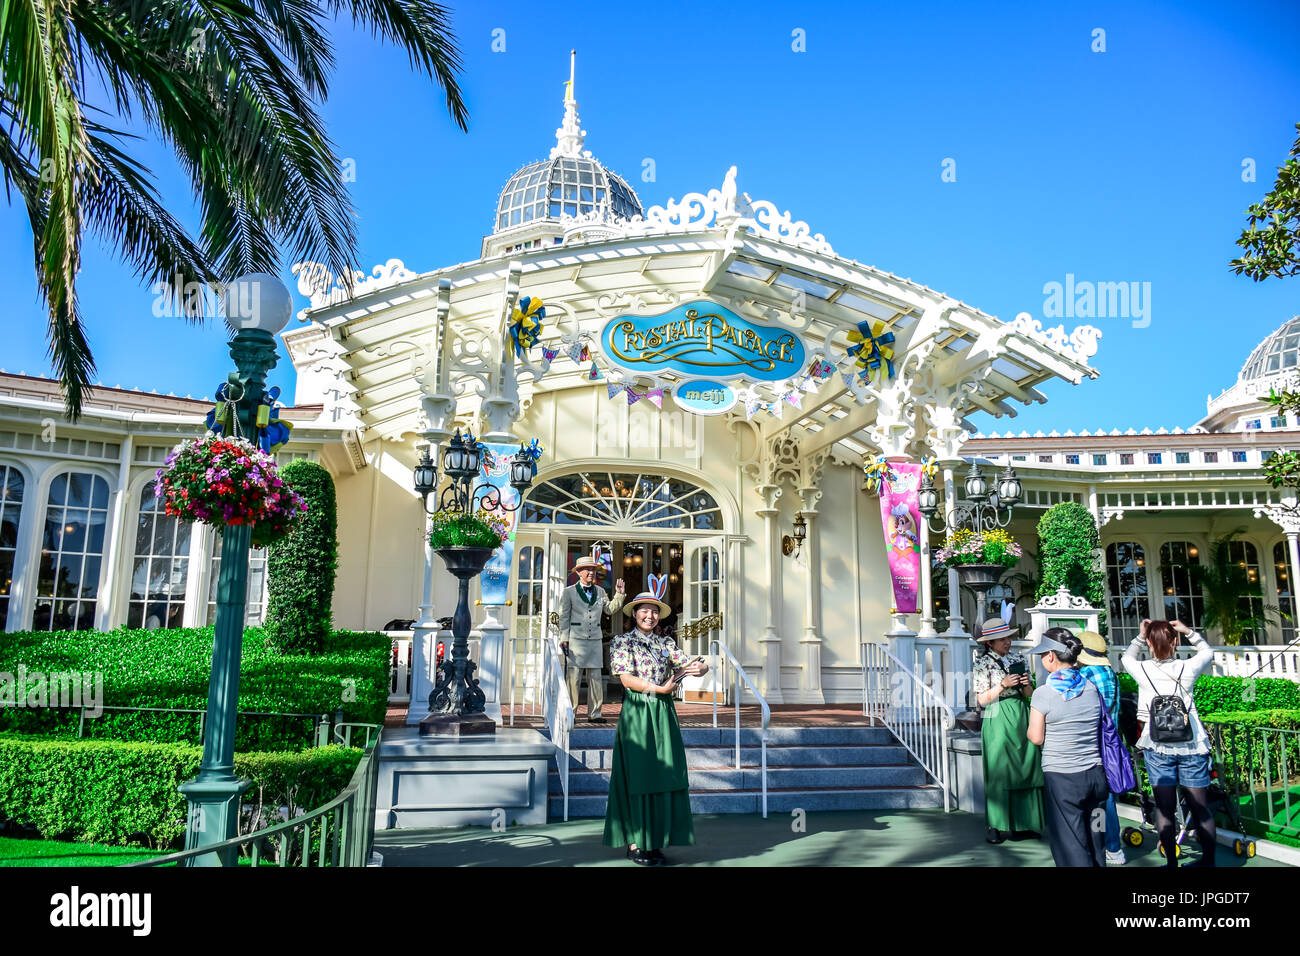 Crystal Palace Restaurant in Adventureland, Tokyo Disneyland Stock Photo